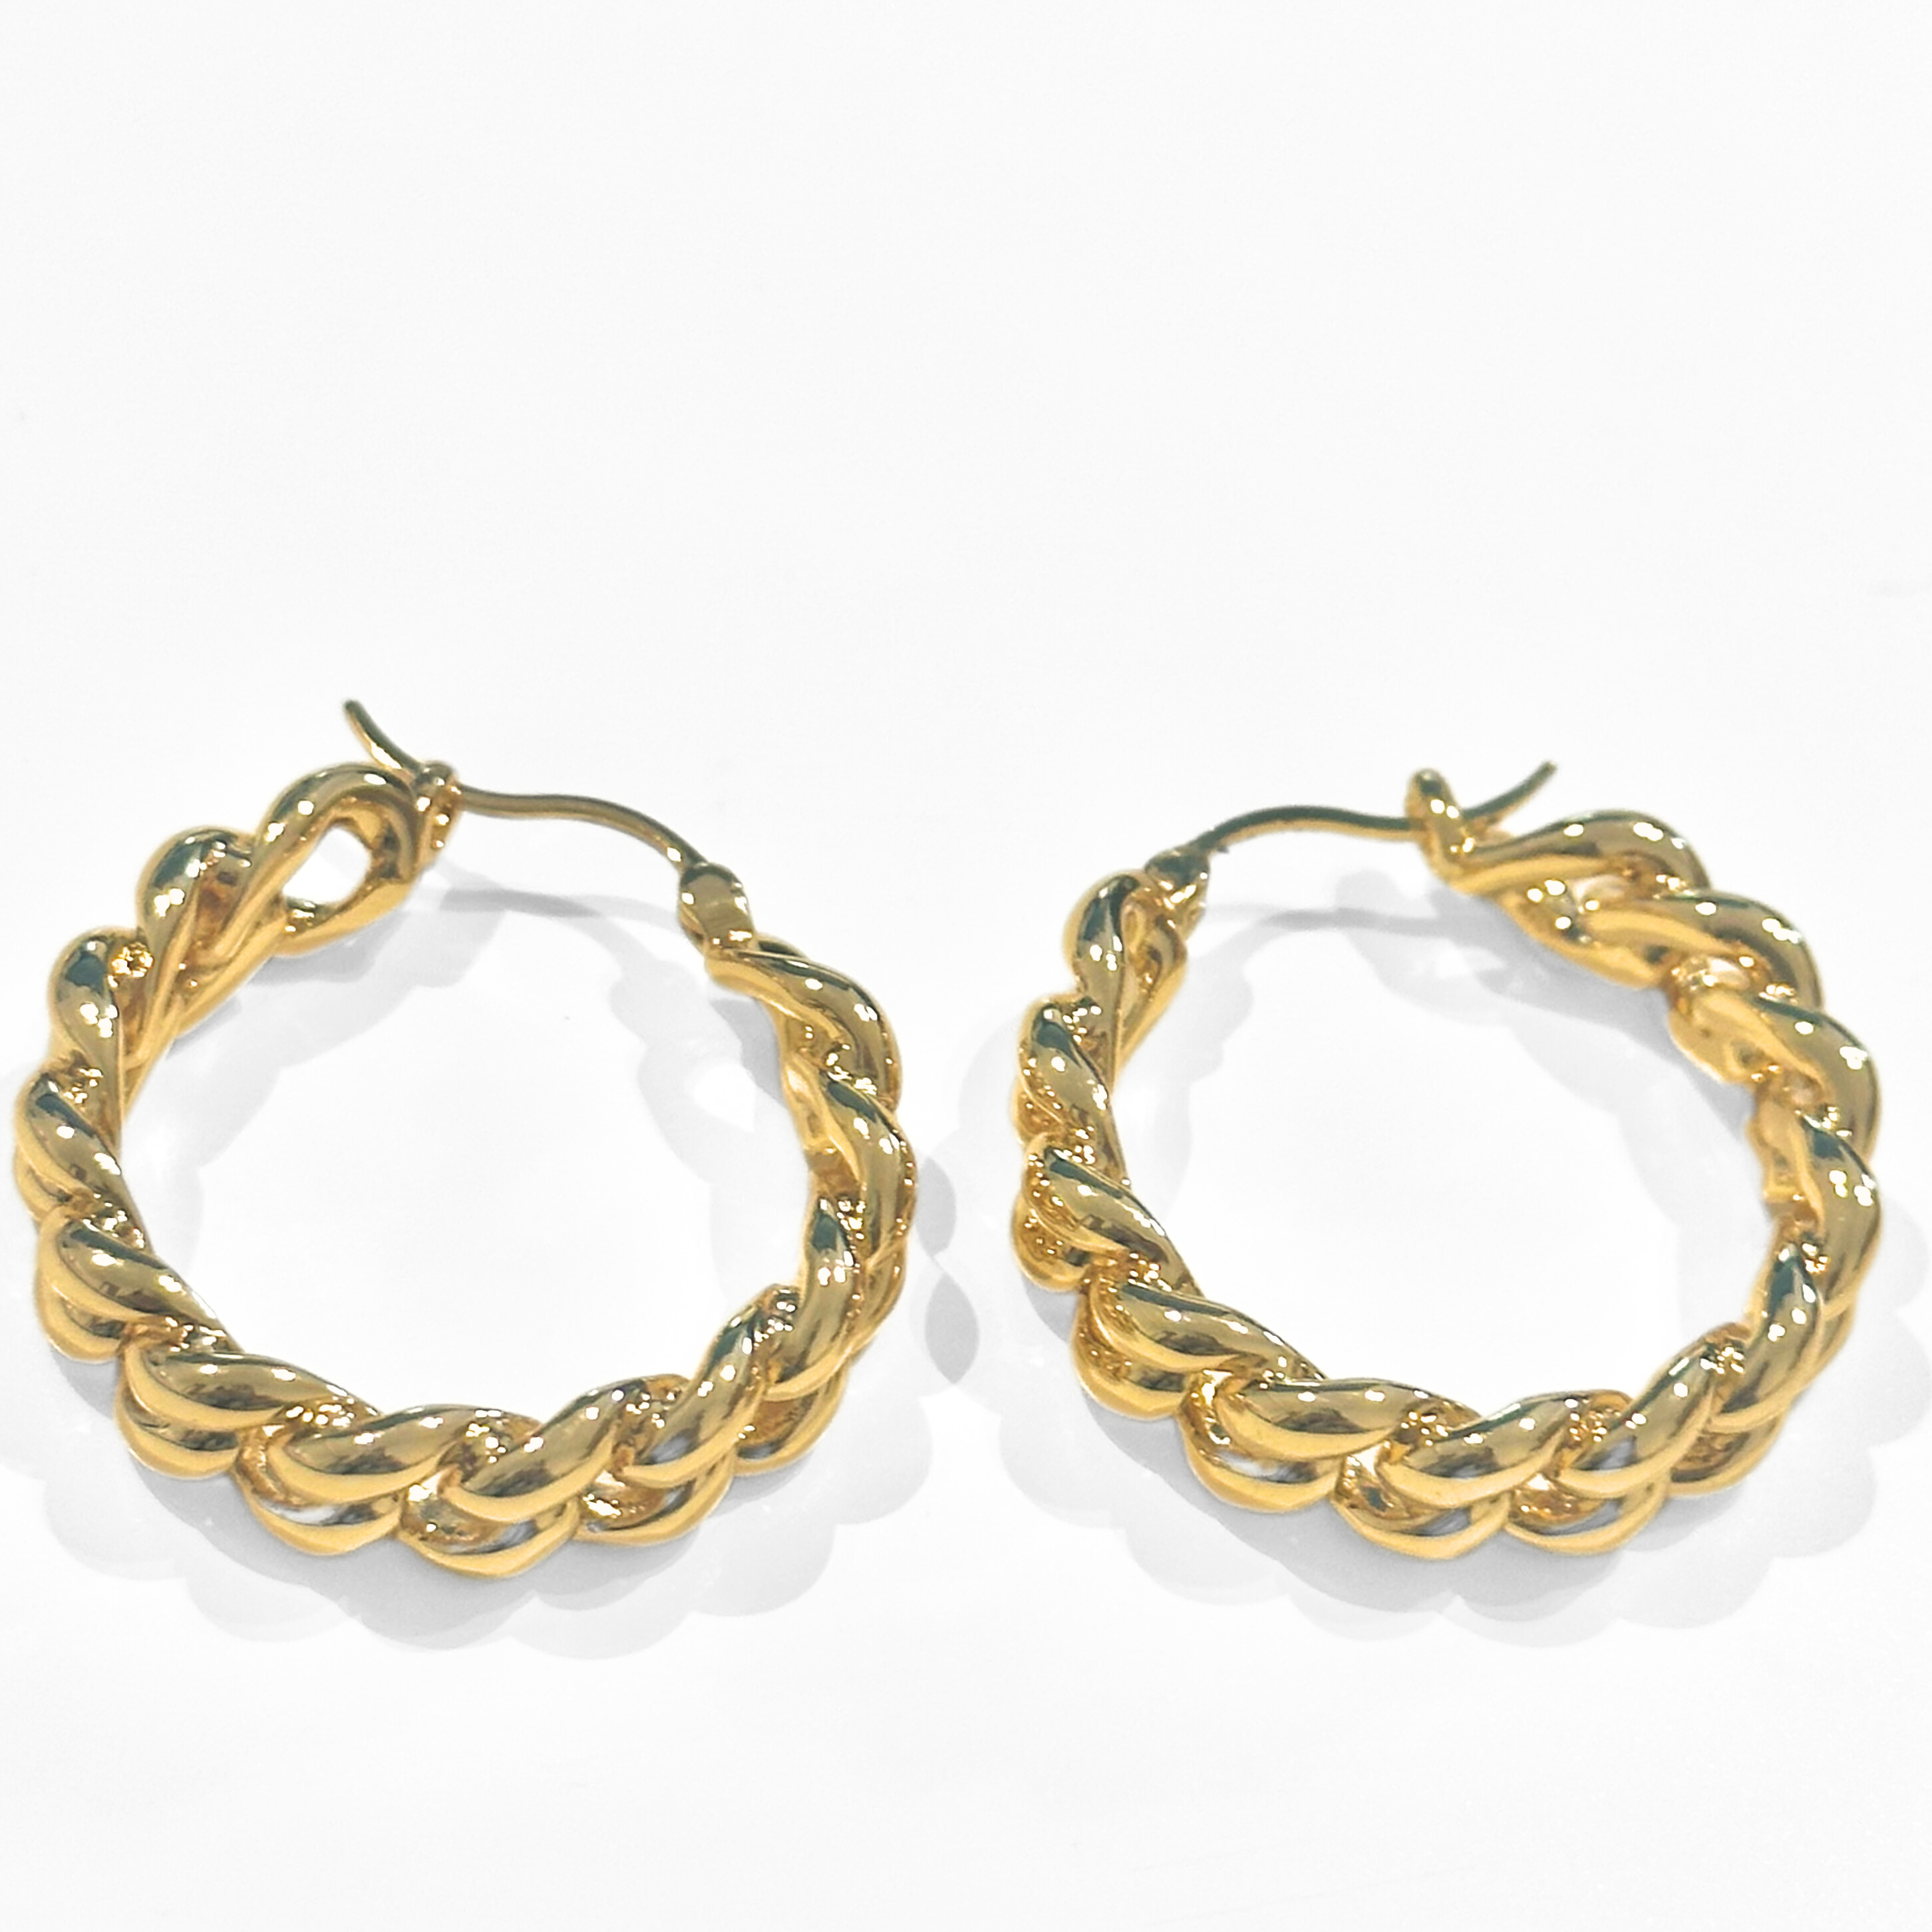 Braided Links Hoop Earrings in 18k Gold Plated Brass - The Reina Hoops